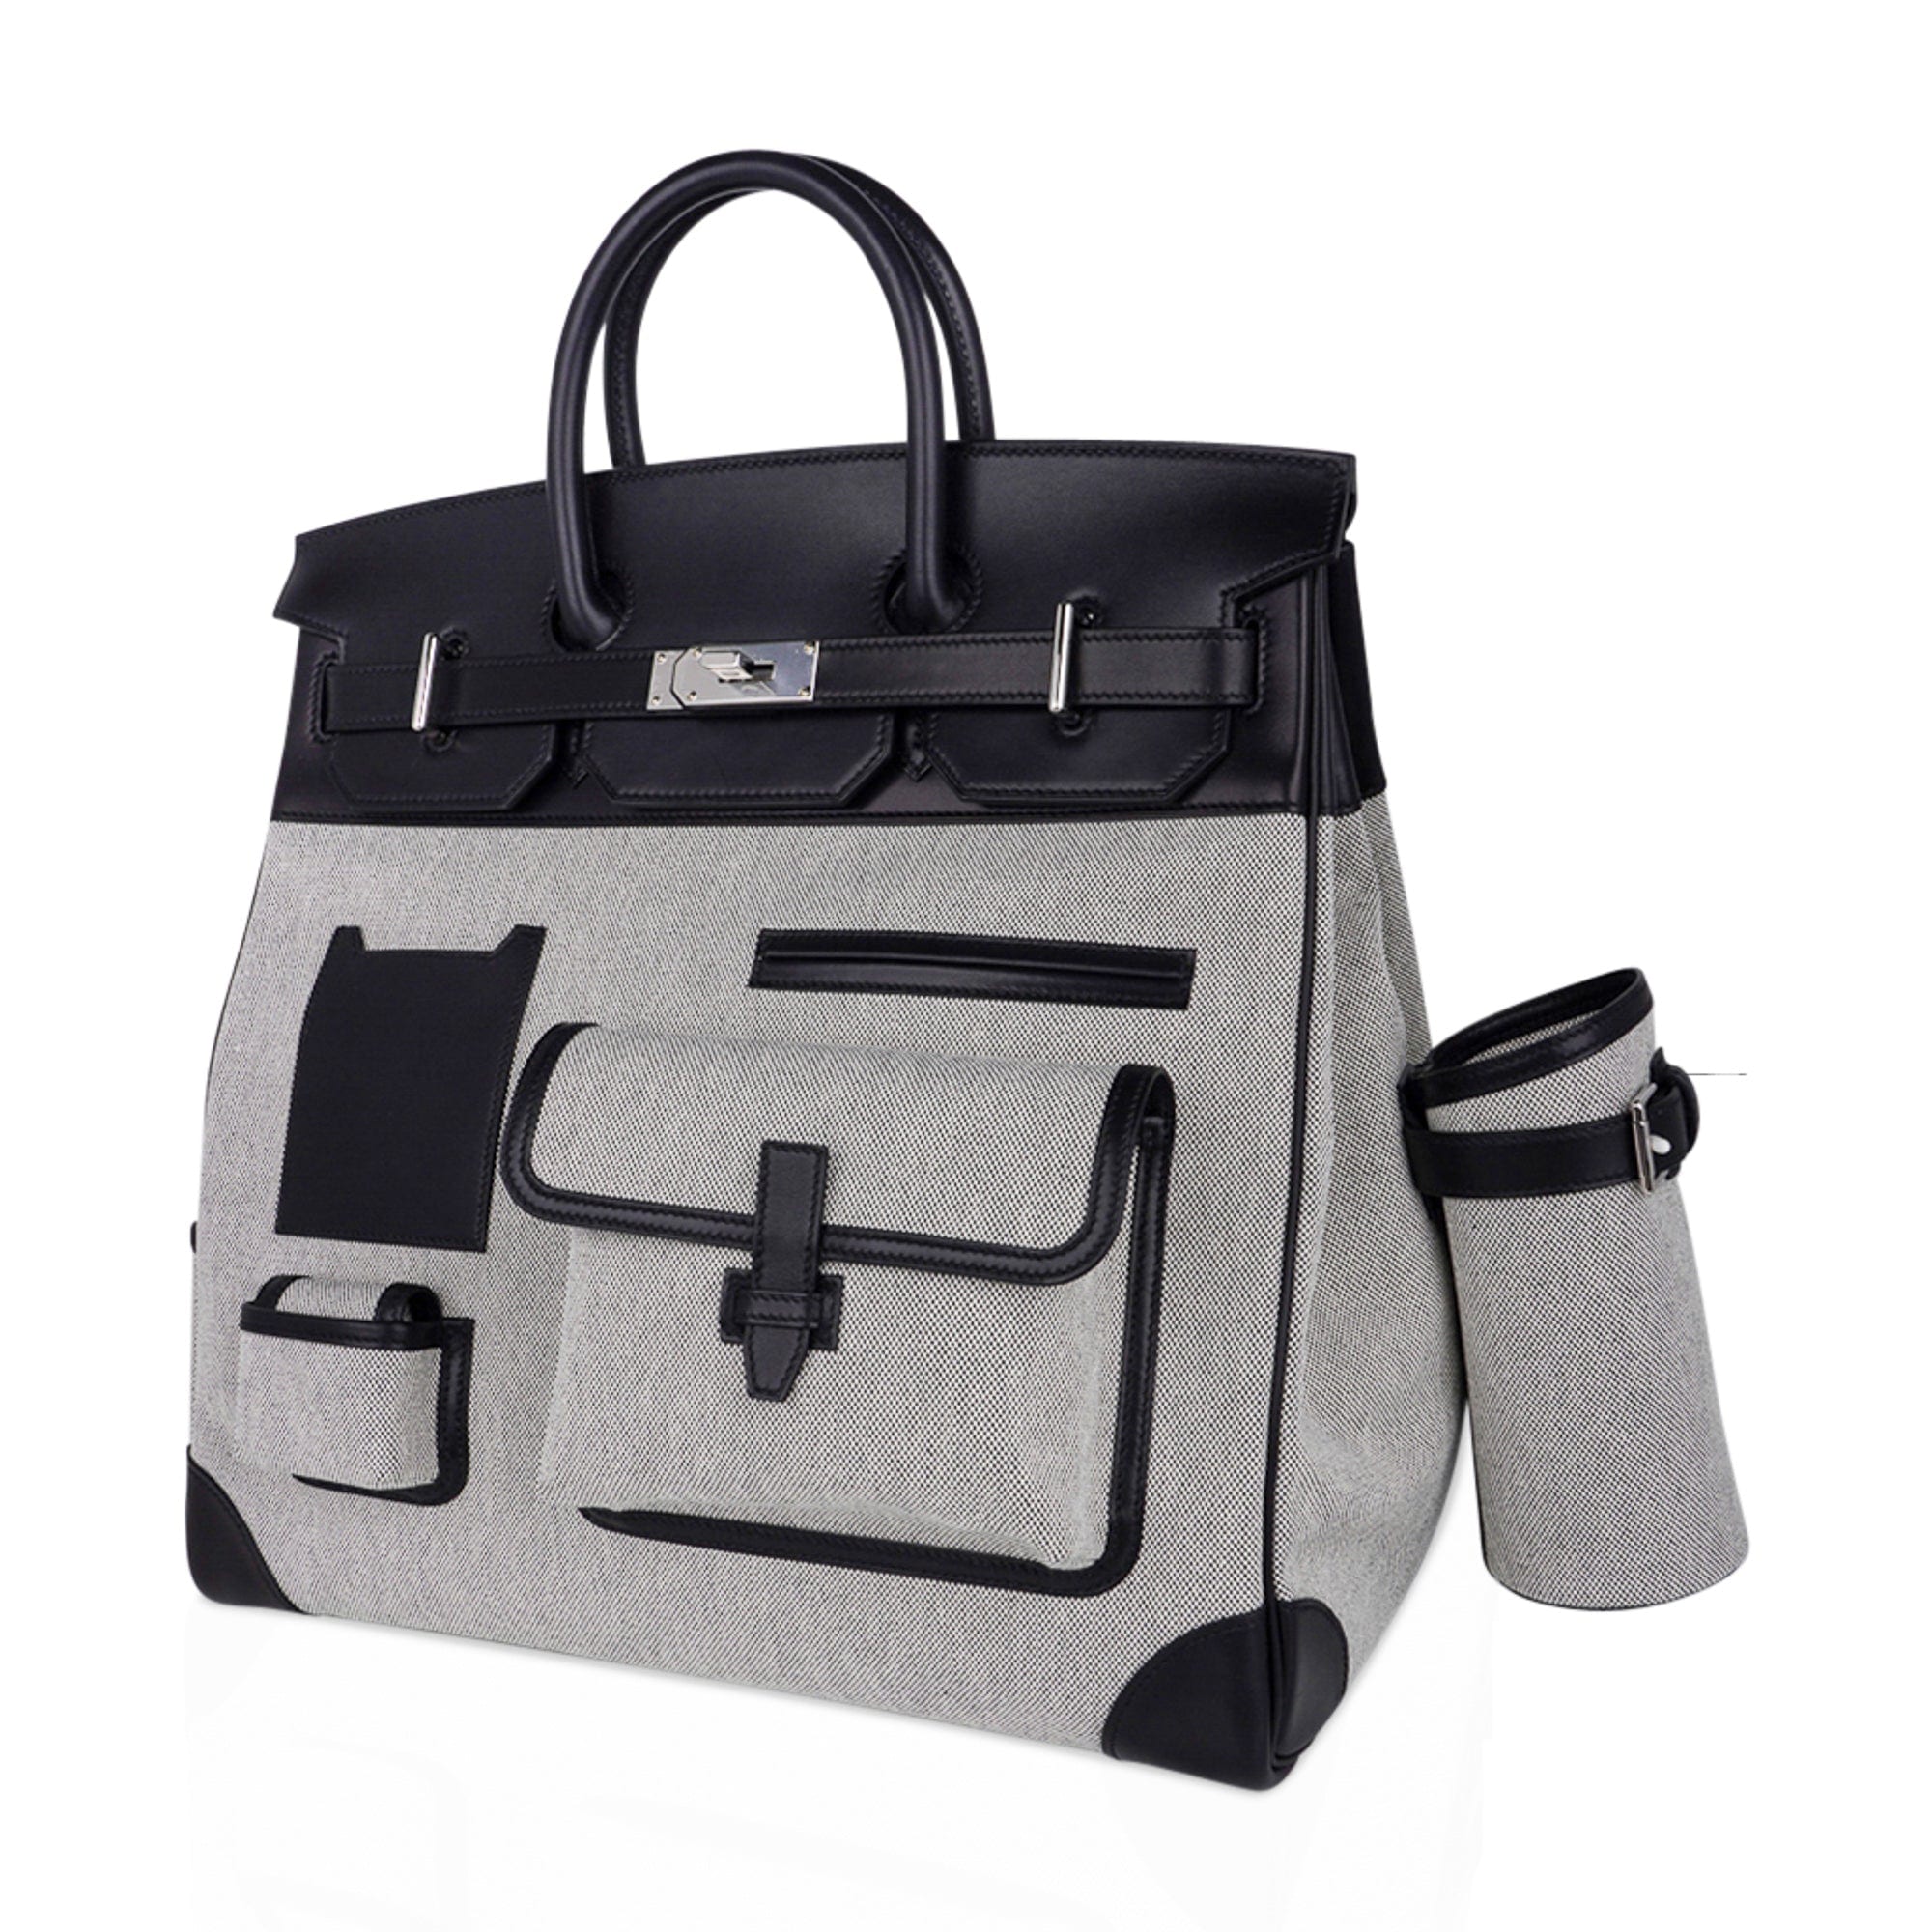 The limited-edition Hermès Birkin Cargo: Utilitarian, Sturdy